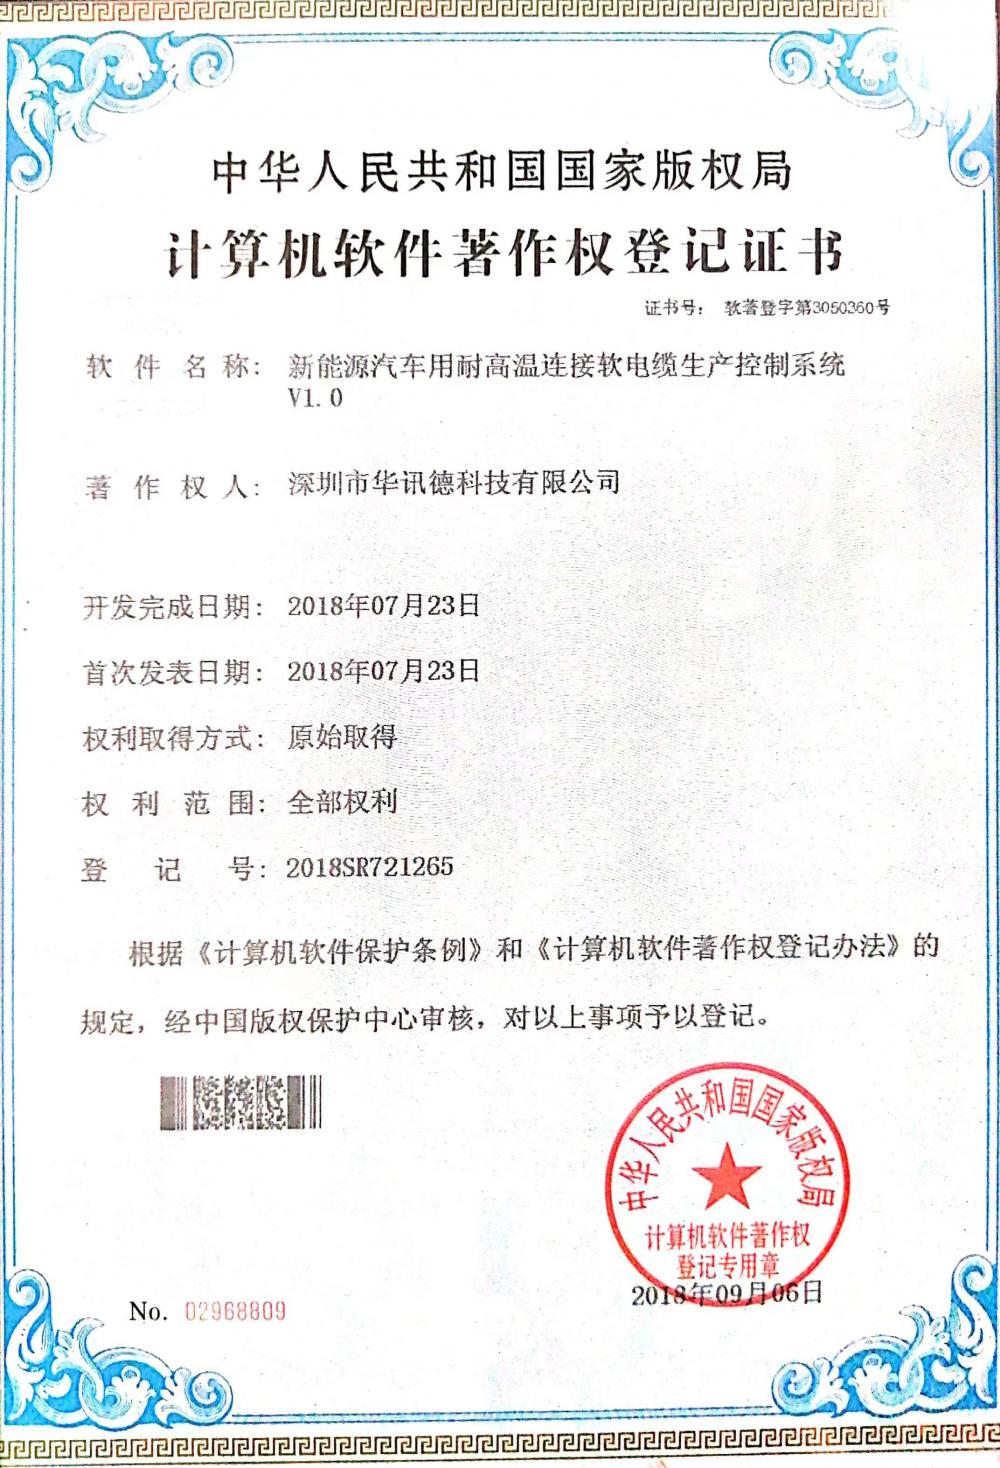 PRC National Copyright Administration Computer Software Copyright Registration Certificate